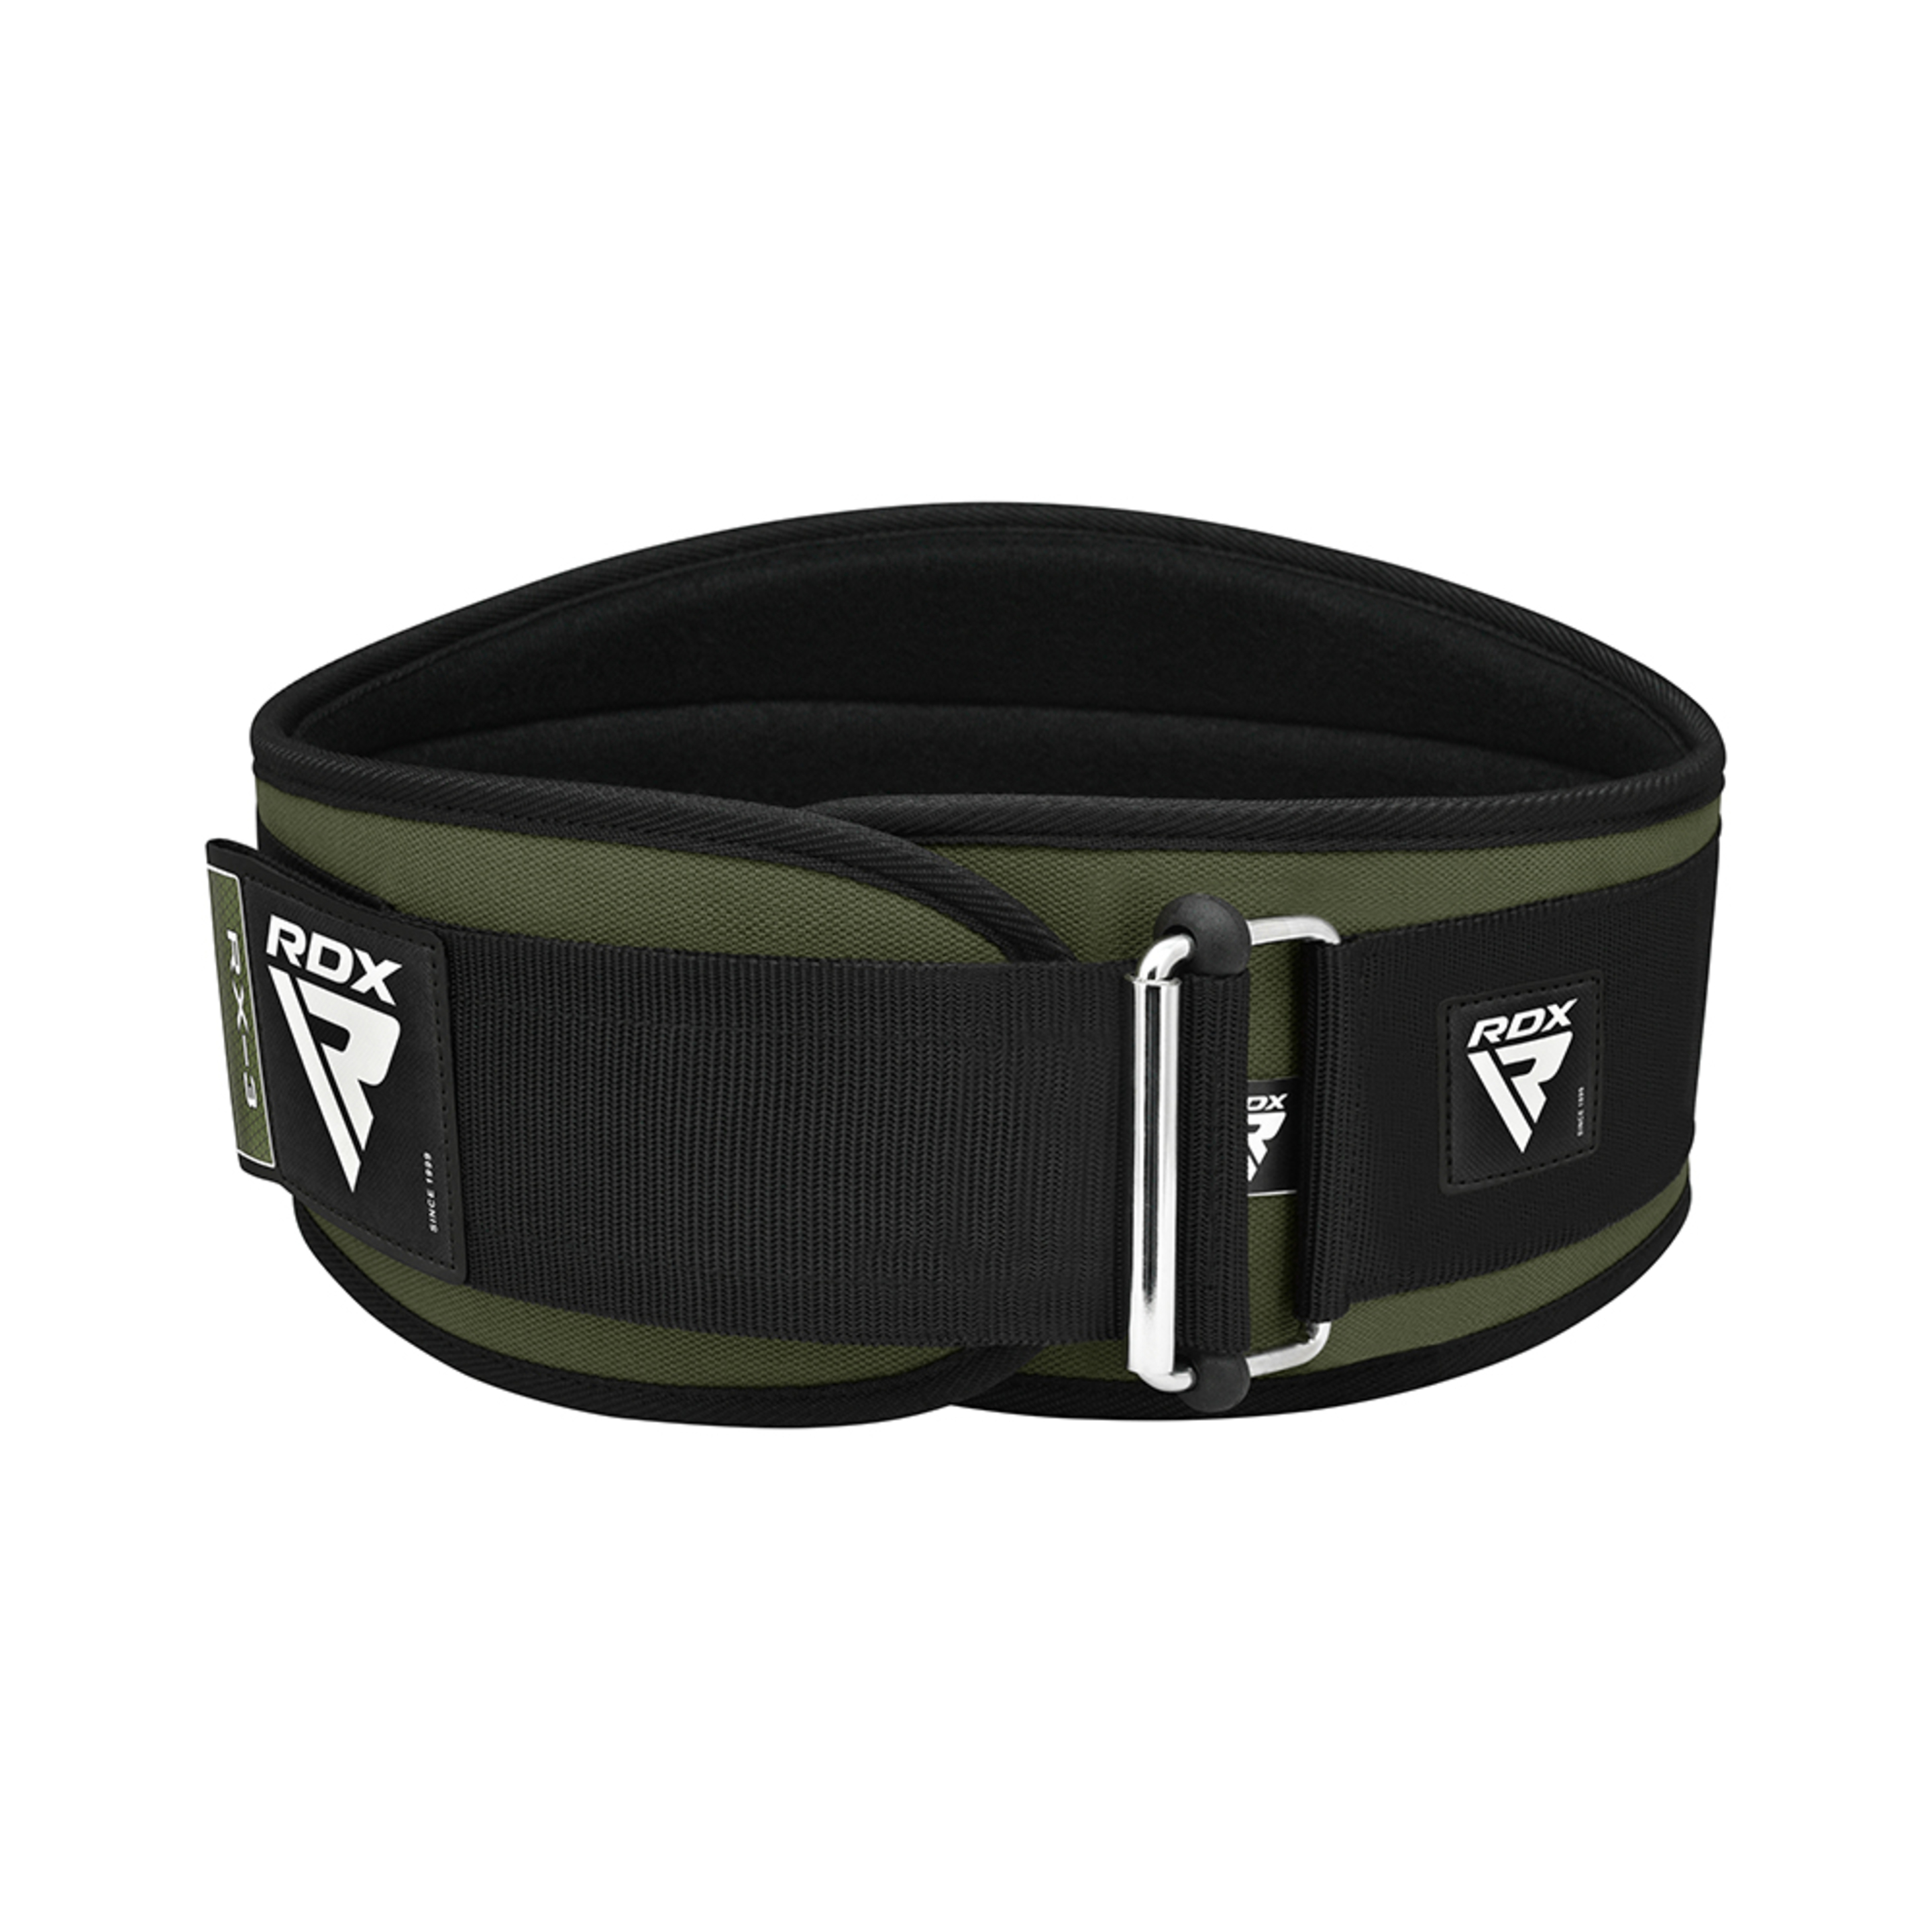 Cinturón De Fitness Rdx Wbe-rx3 - verde - 